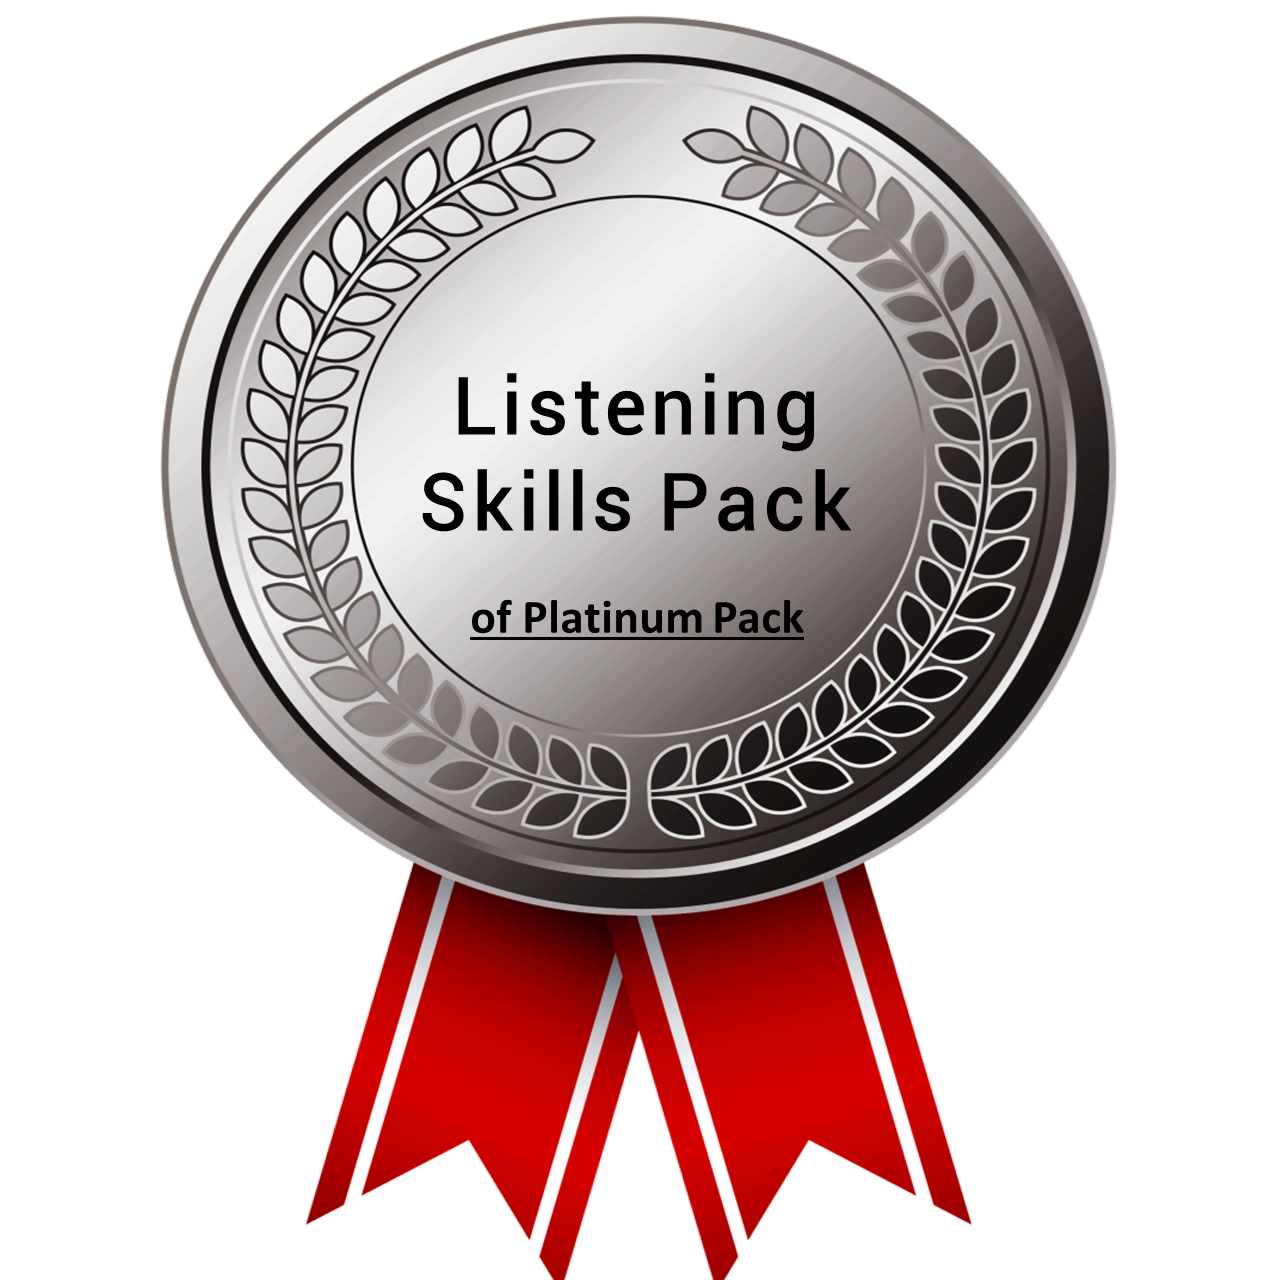 Listening Skills Pack - Platinum Pack - Ready made soft skills training ppt